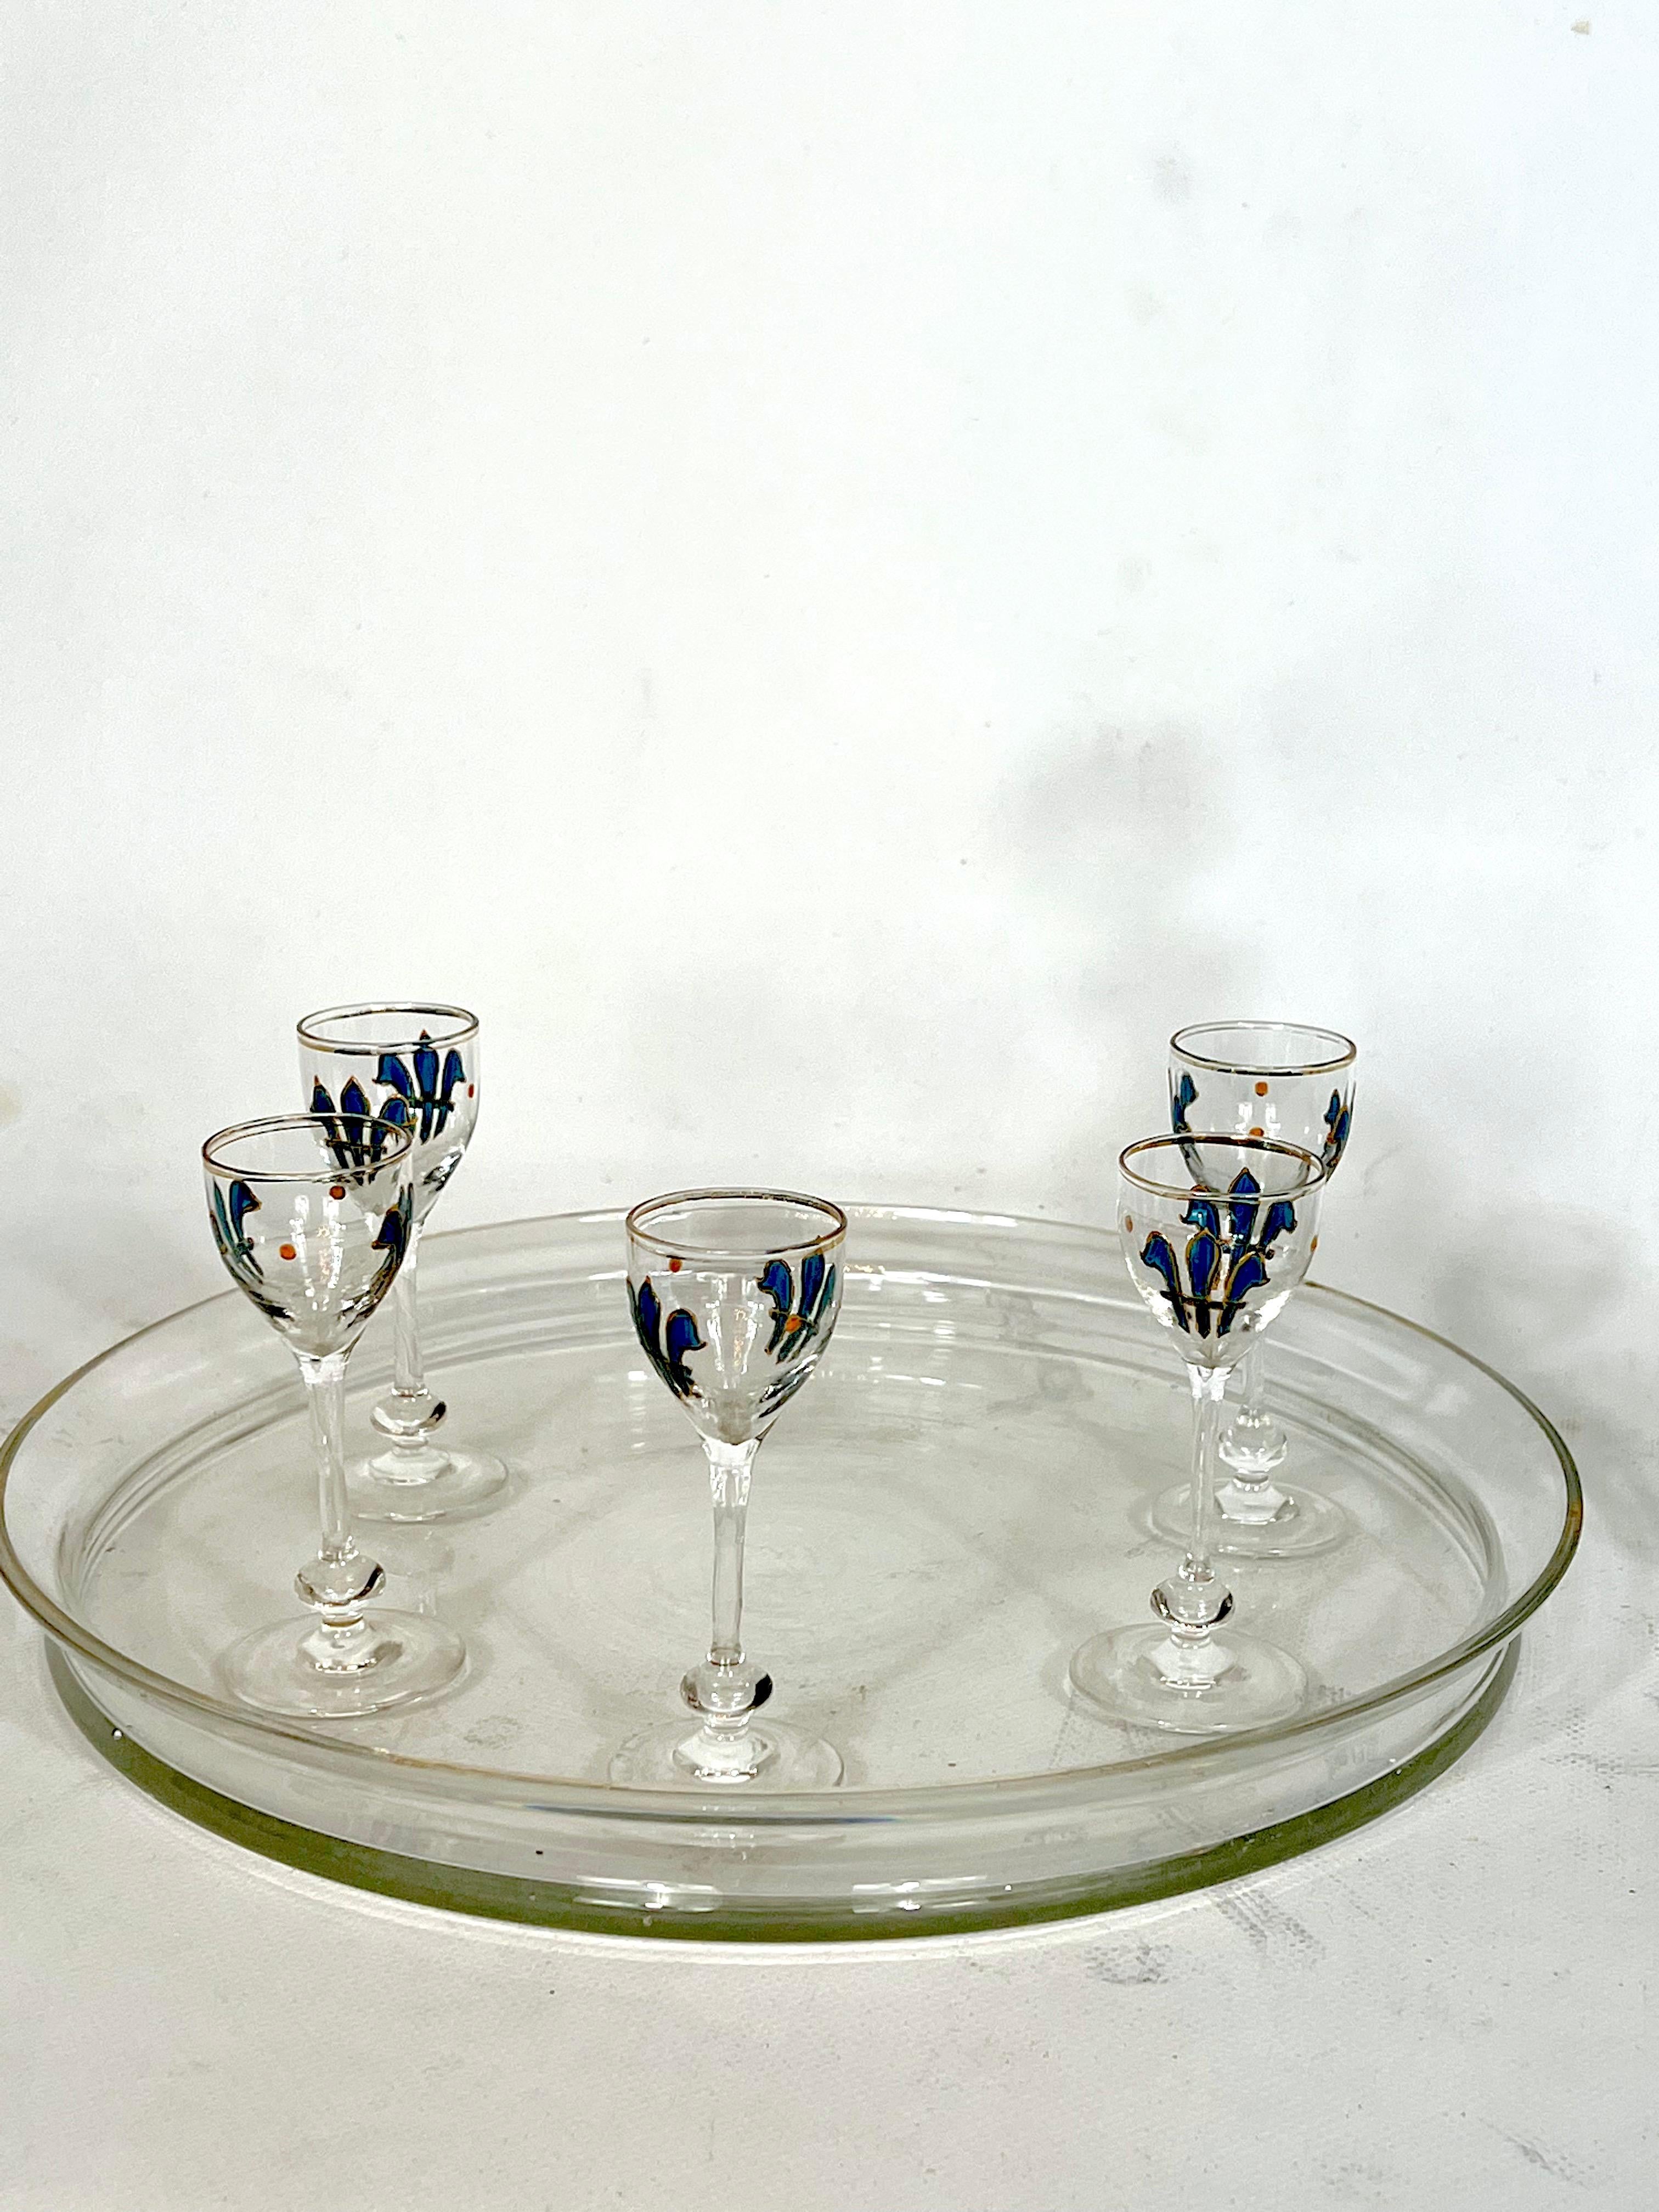 Italian Art Nouveau Glass Liquor Set from 1920s For Sale 8